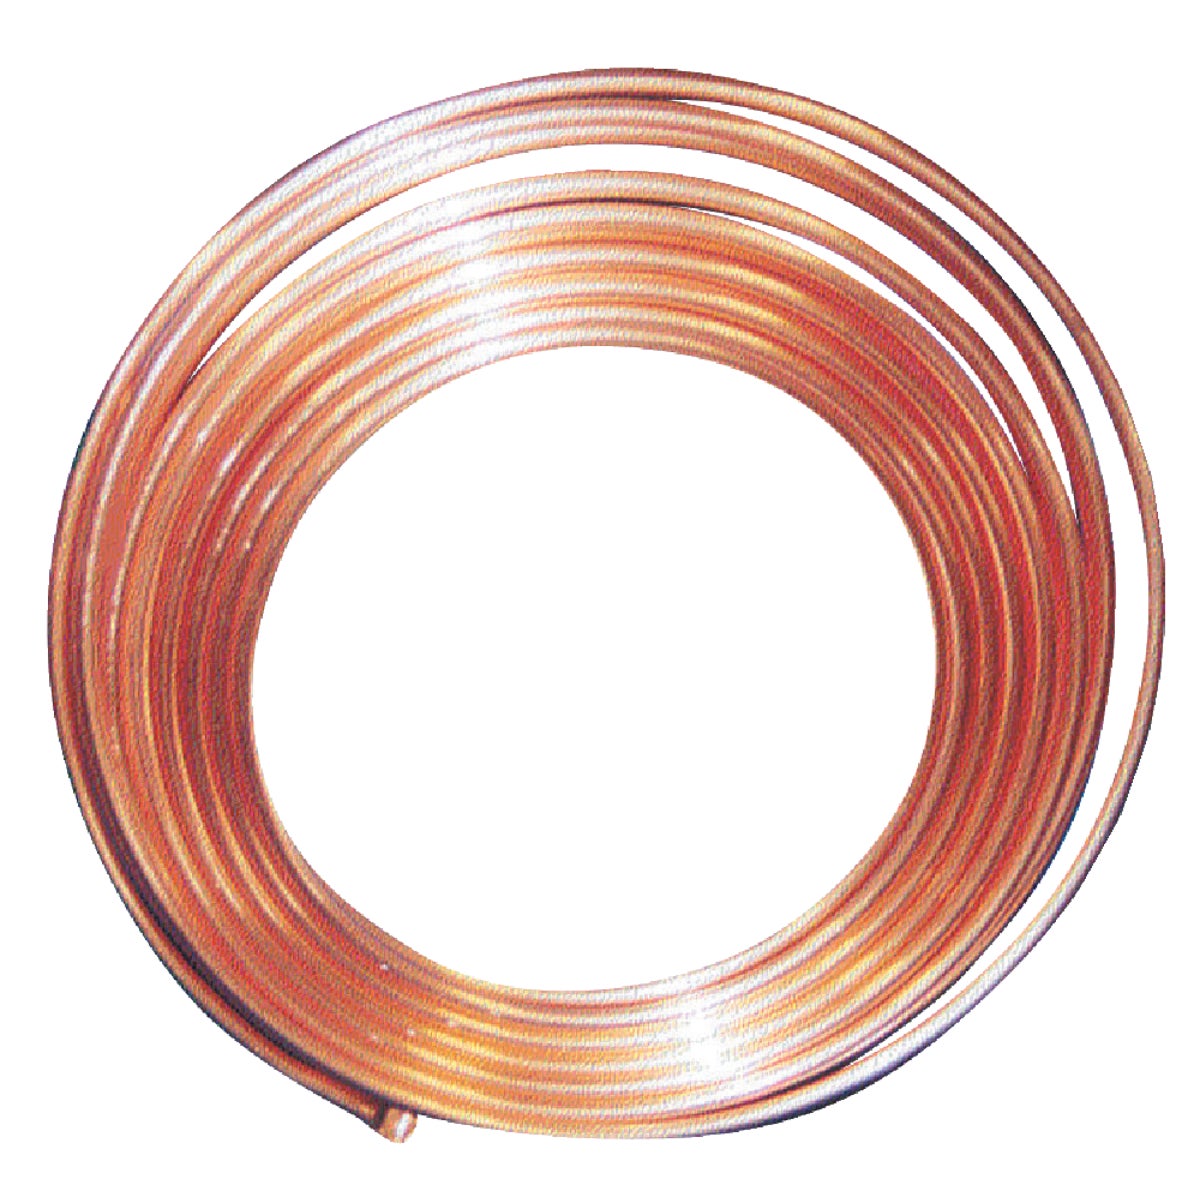 Item 474355, Type K copper tubing.